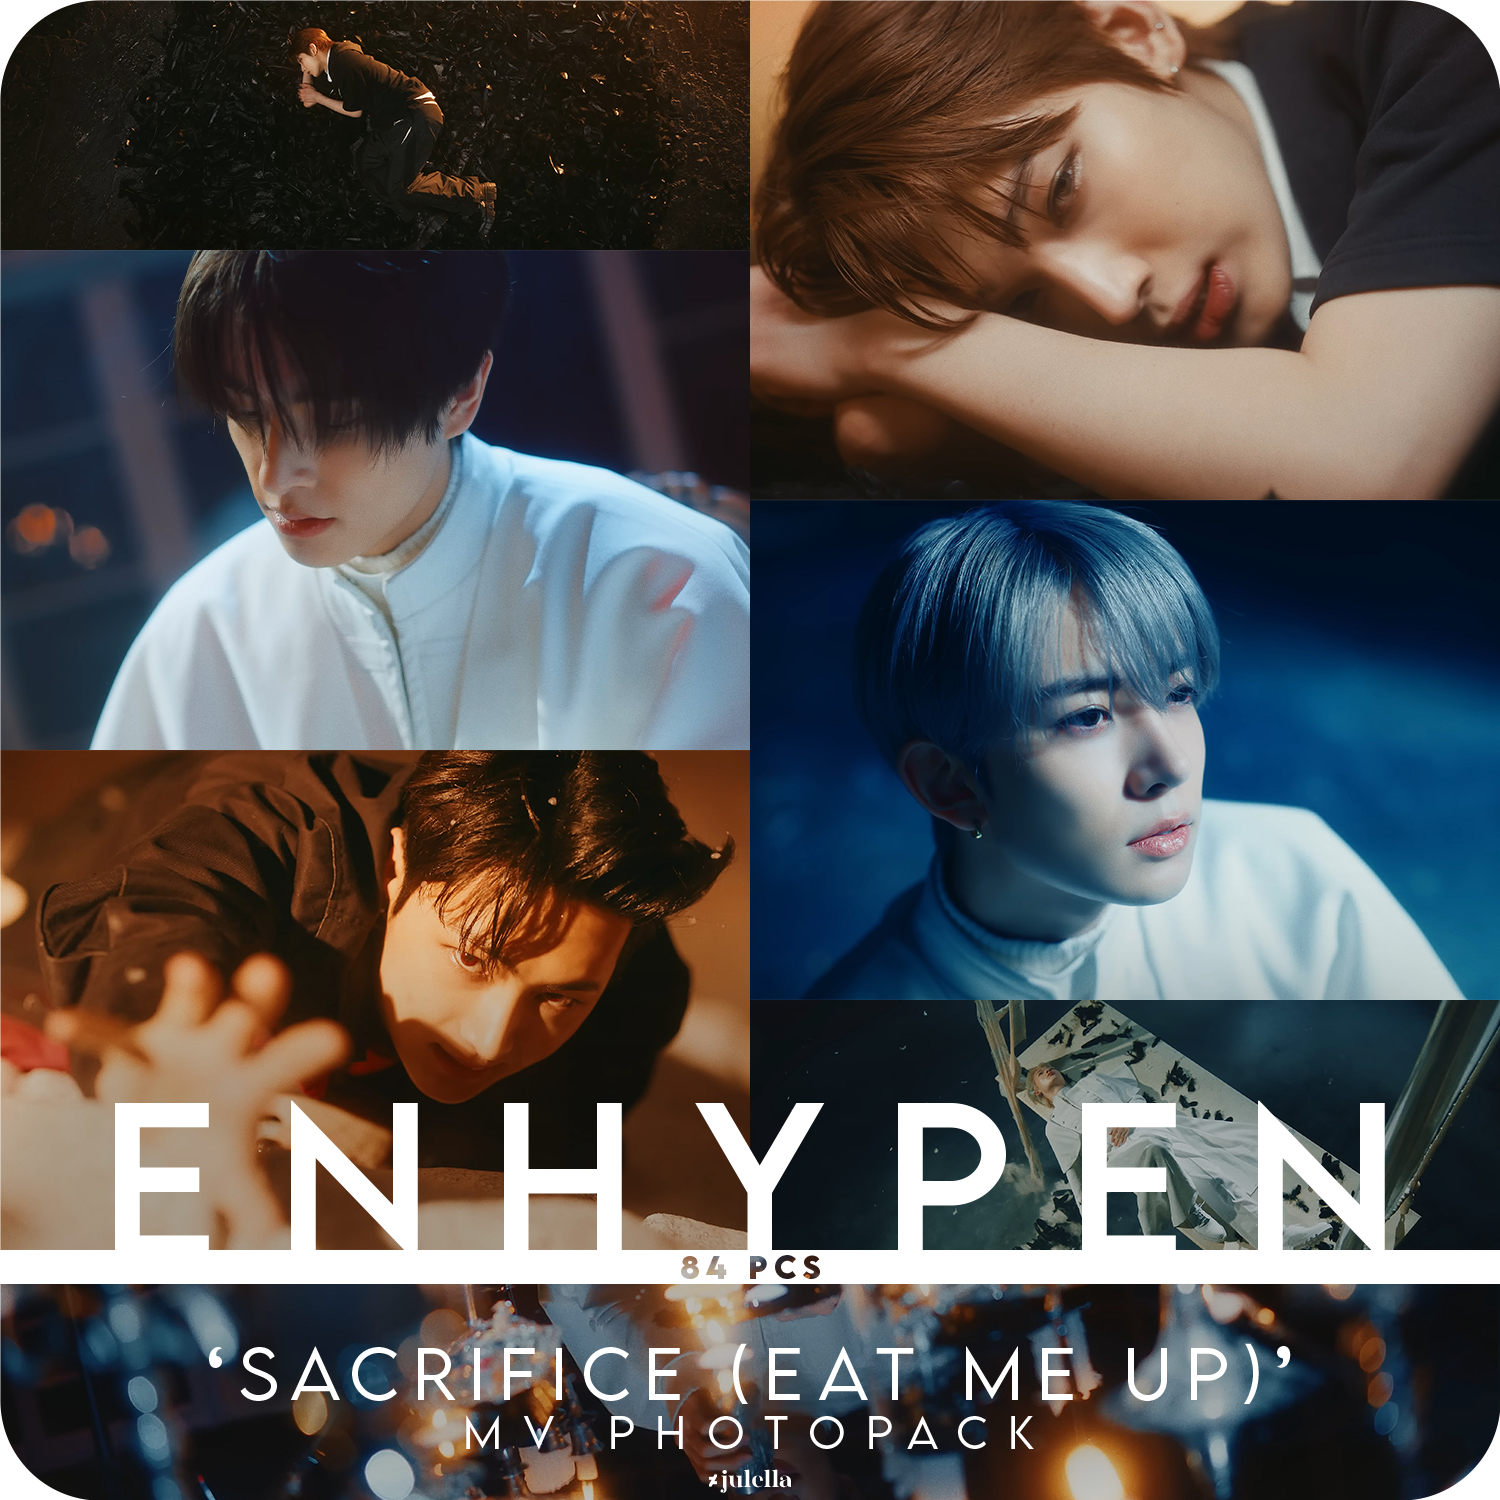 ENHYPEN - 'SACRIFICE (EAT ME UP)' MV / PHOTOPACK by julella on